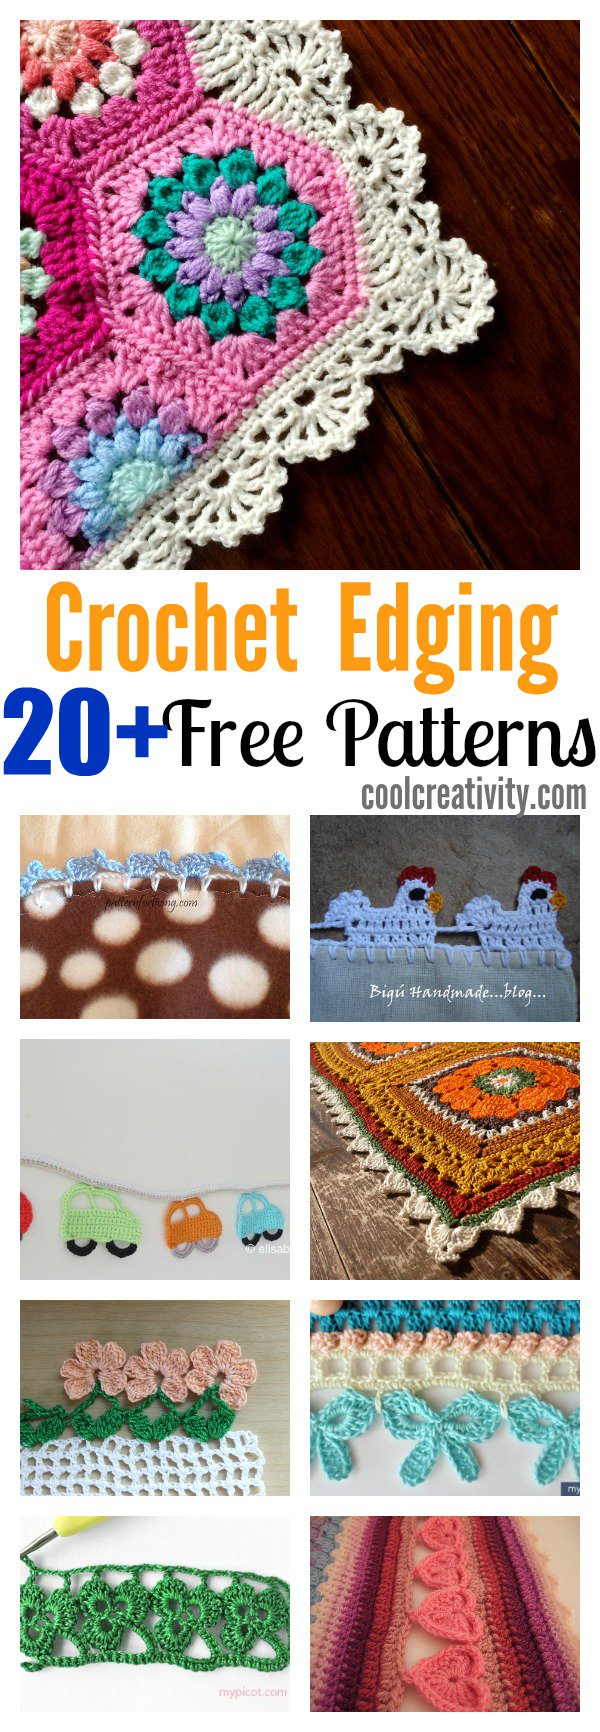 Crochet Trim Patterns 20 Crochet Free Edging Patterns You Should Know